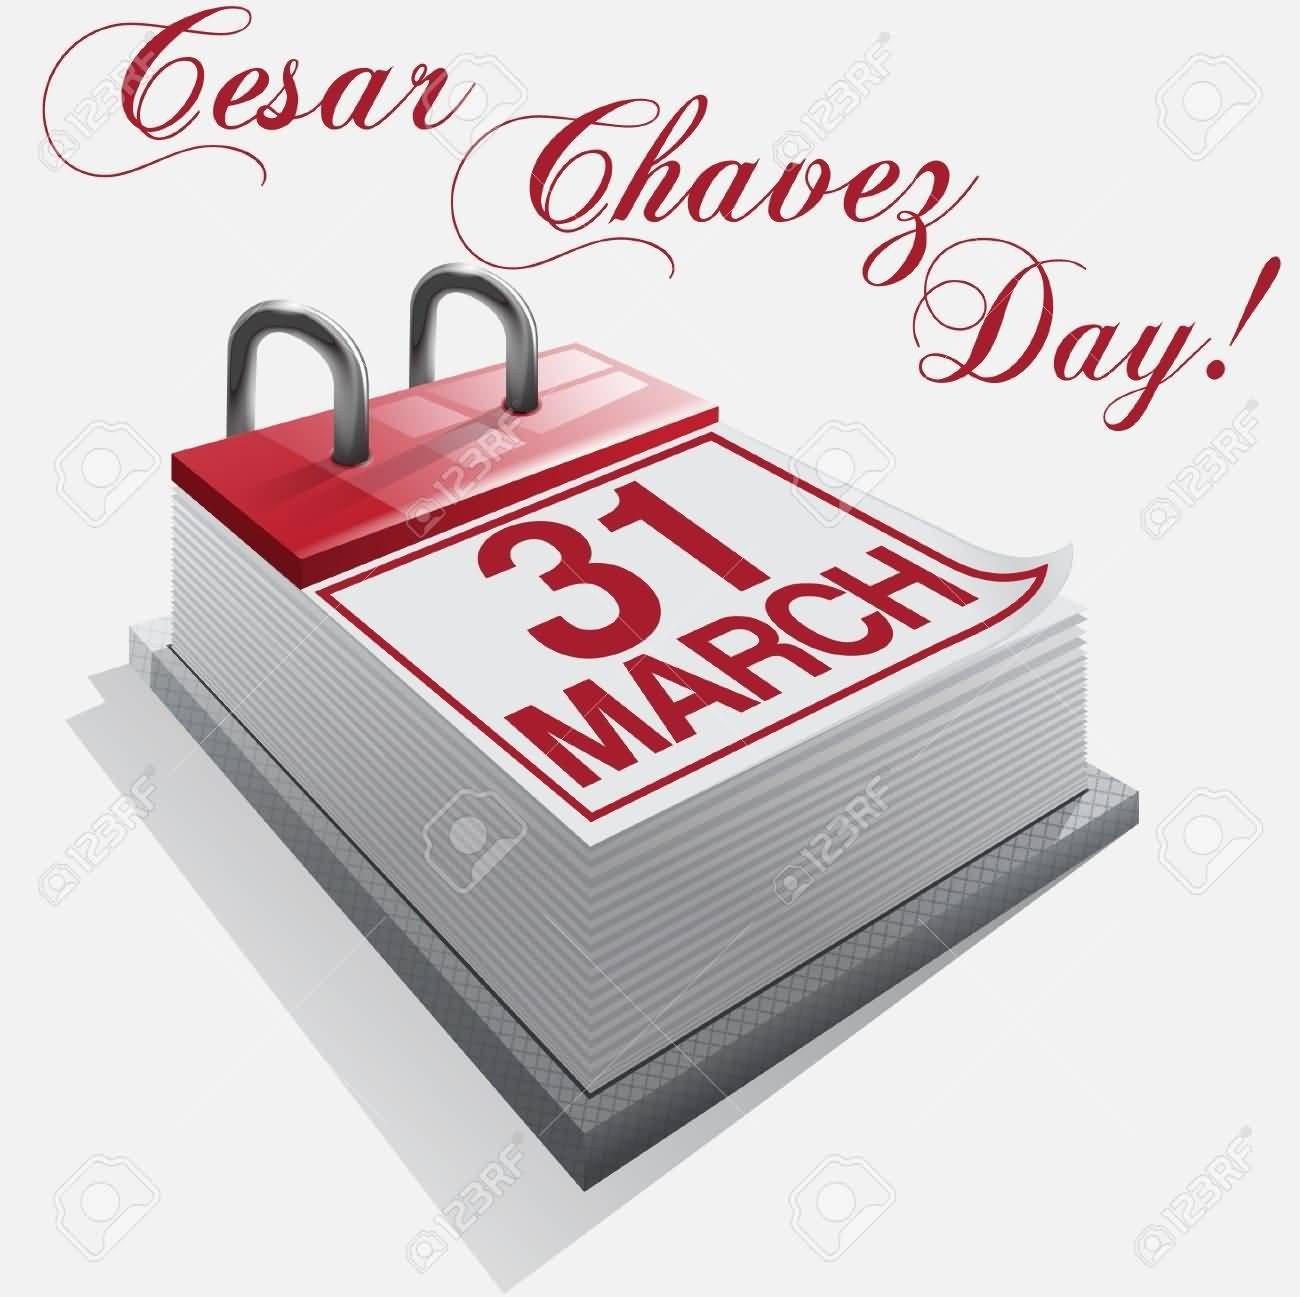 Cesar Chavez Day 31 March Calendar Illustration